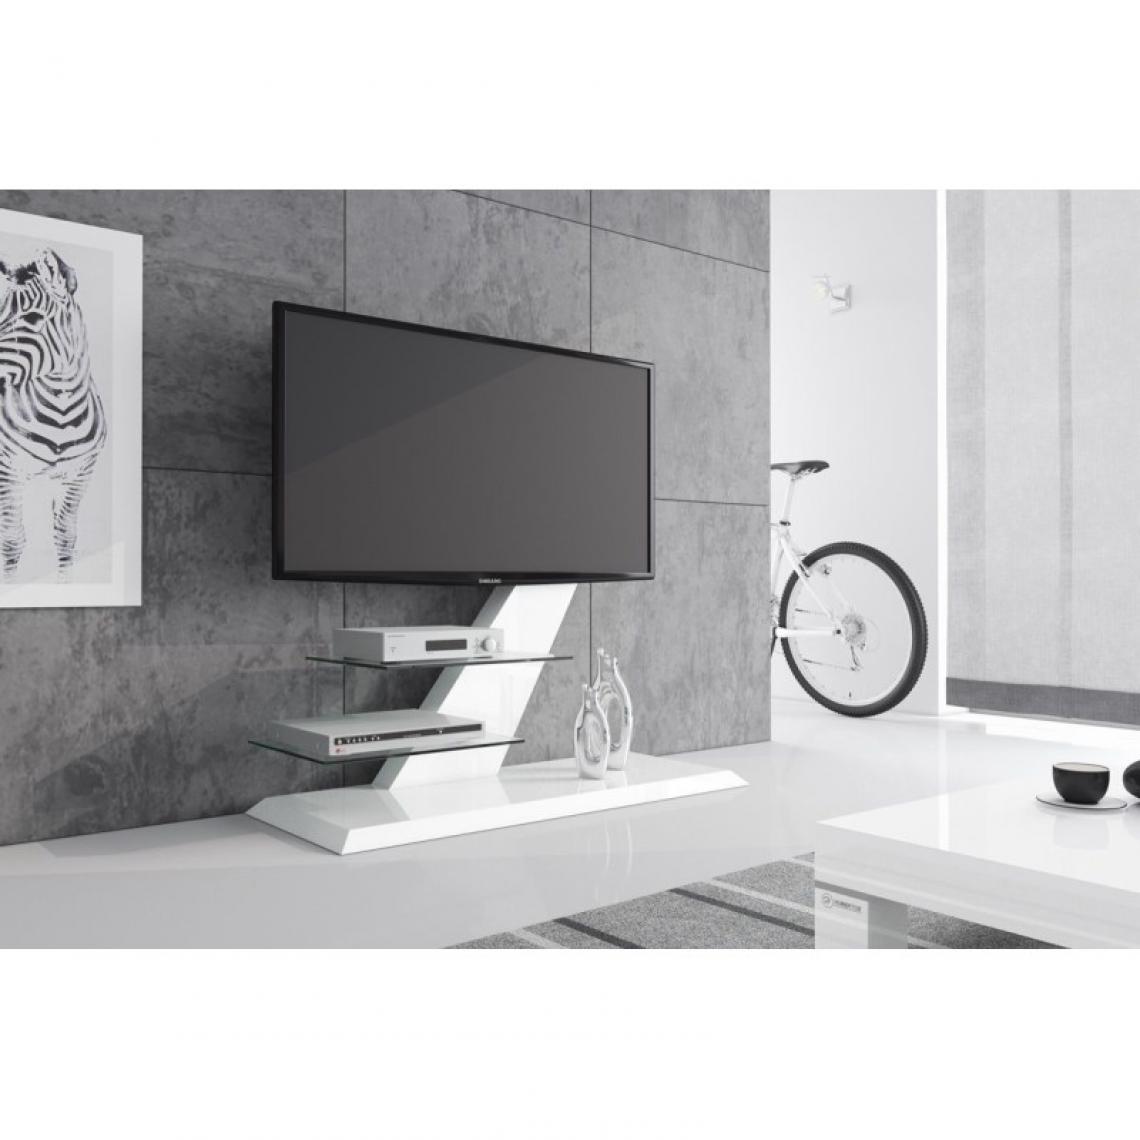 Carellia - Meuble TV design laqué 110 cm x 50 cm x 106 cm - Blanc - Meubles TV, Hi-Fi